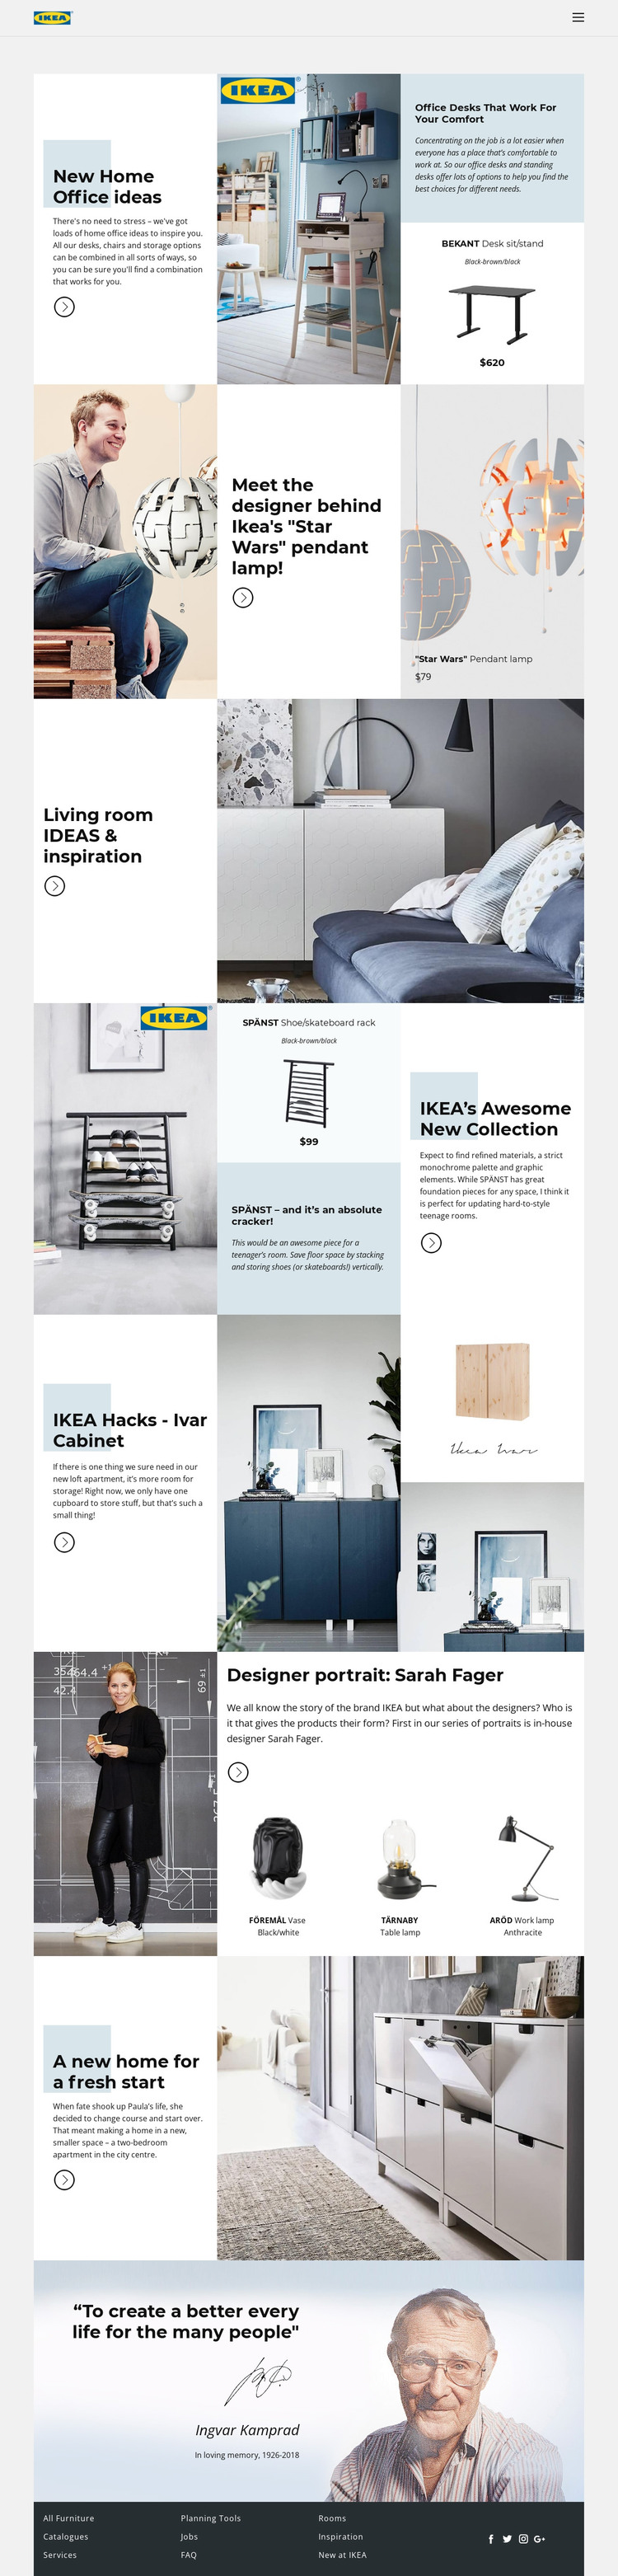 Inspiration from IKEA Web Design